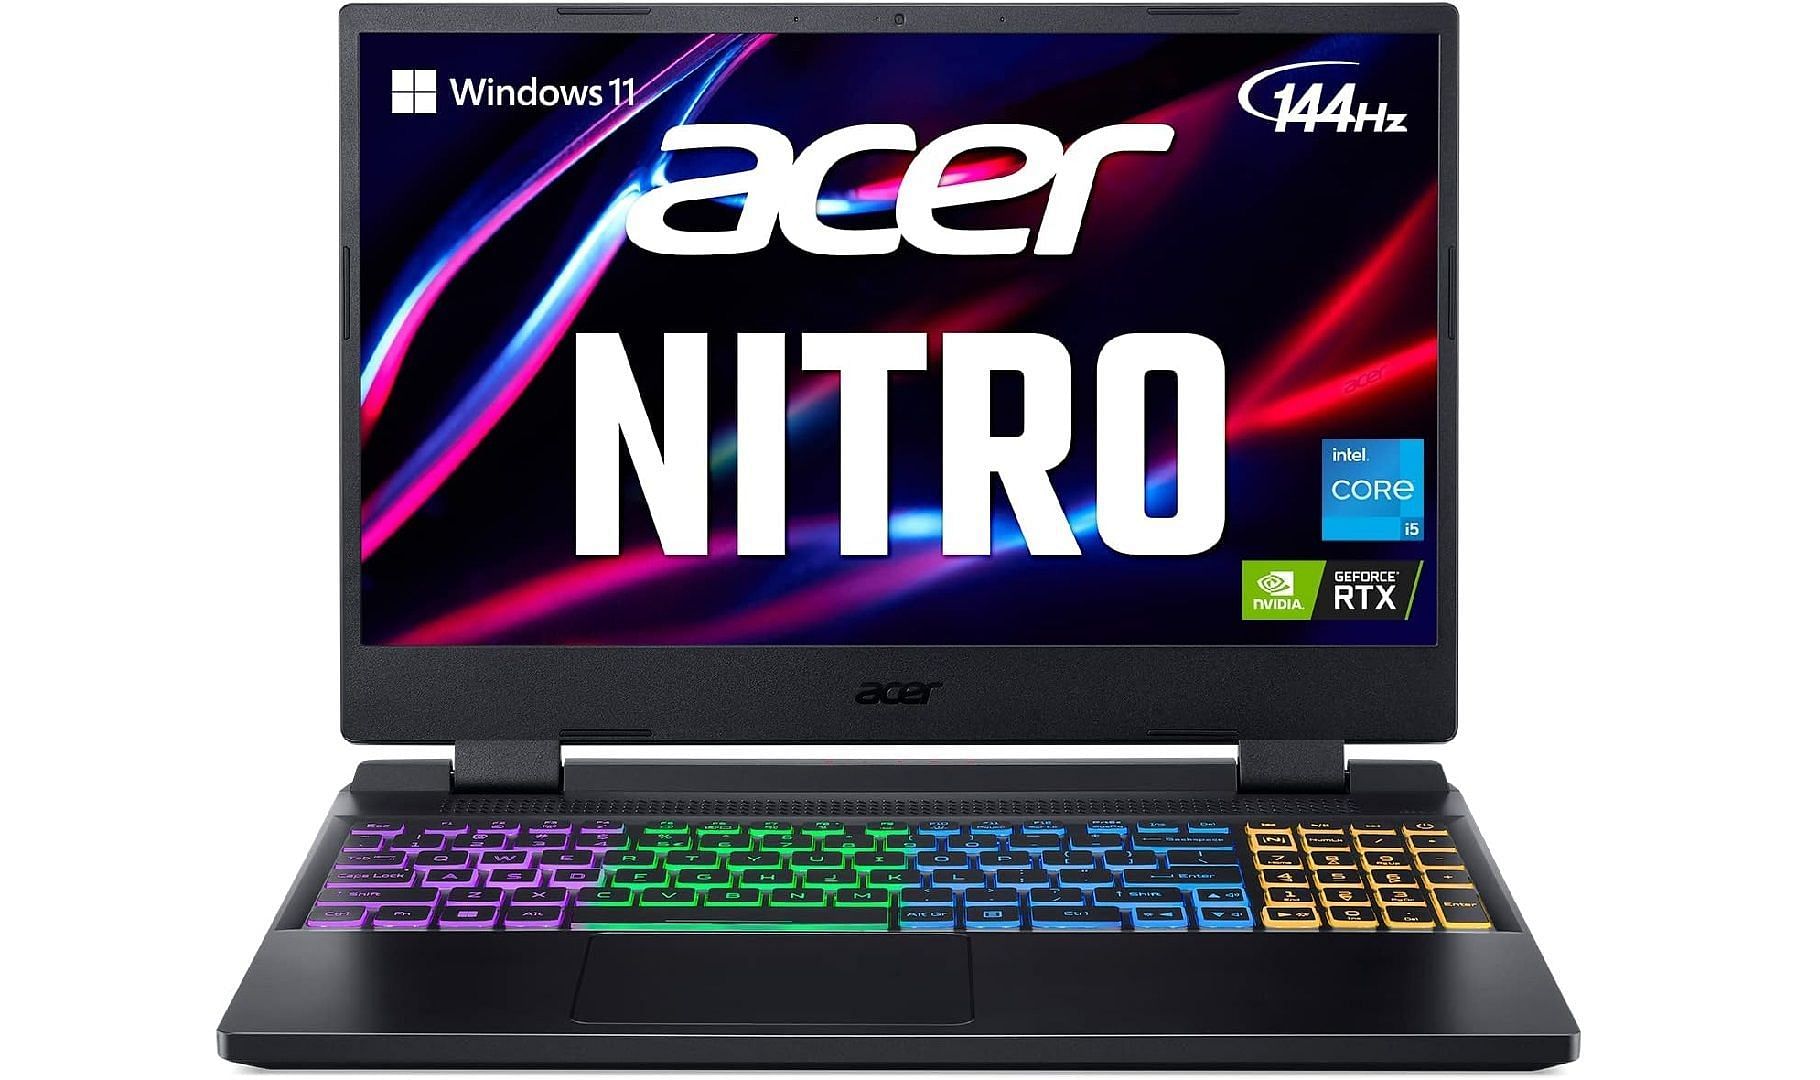 Acer Nitro 5 gaming laptop (Image via Acer)